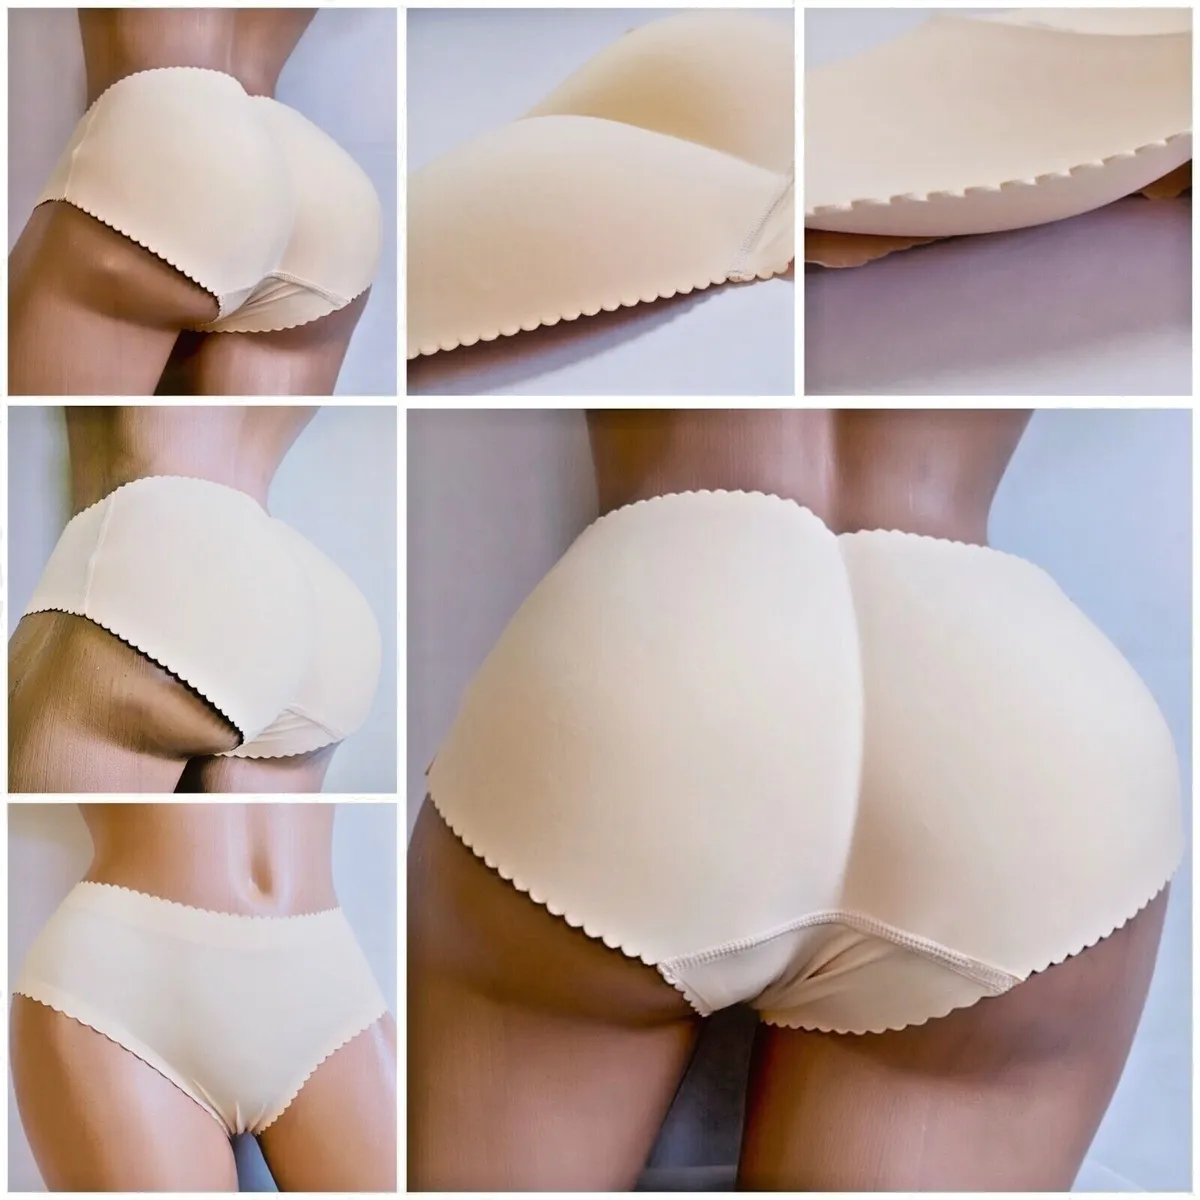 dominic maingi share butt no underwear photos